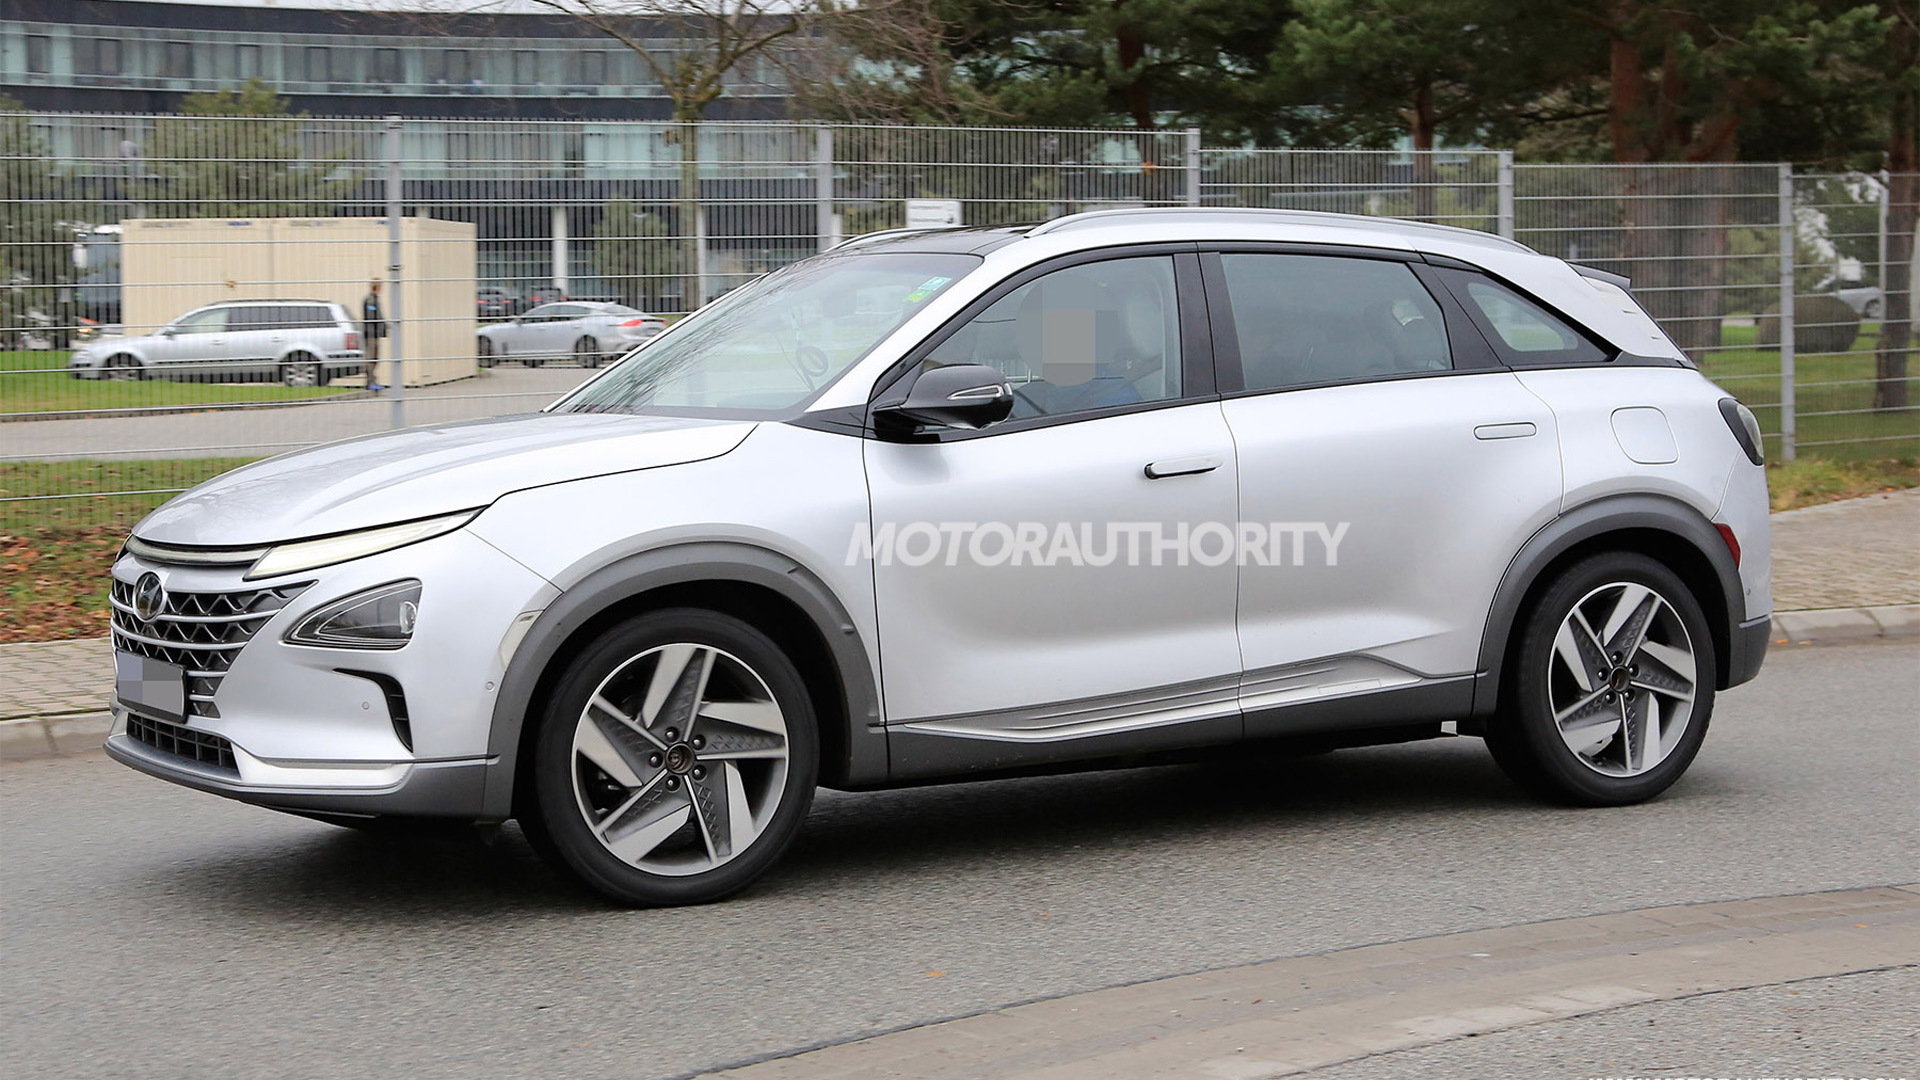 2019 Hyundai fuel cell SUV spy shots - Image via S. Baldauf/SB-Medien